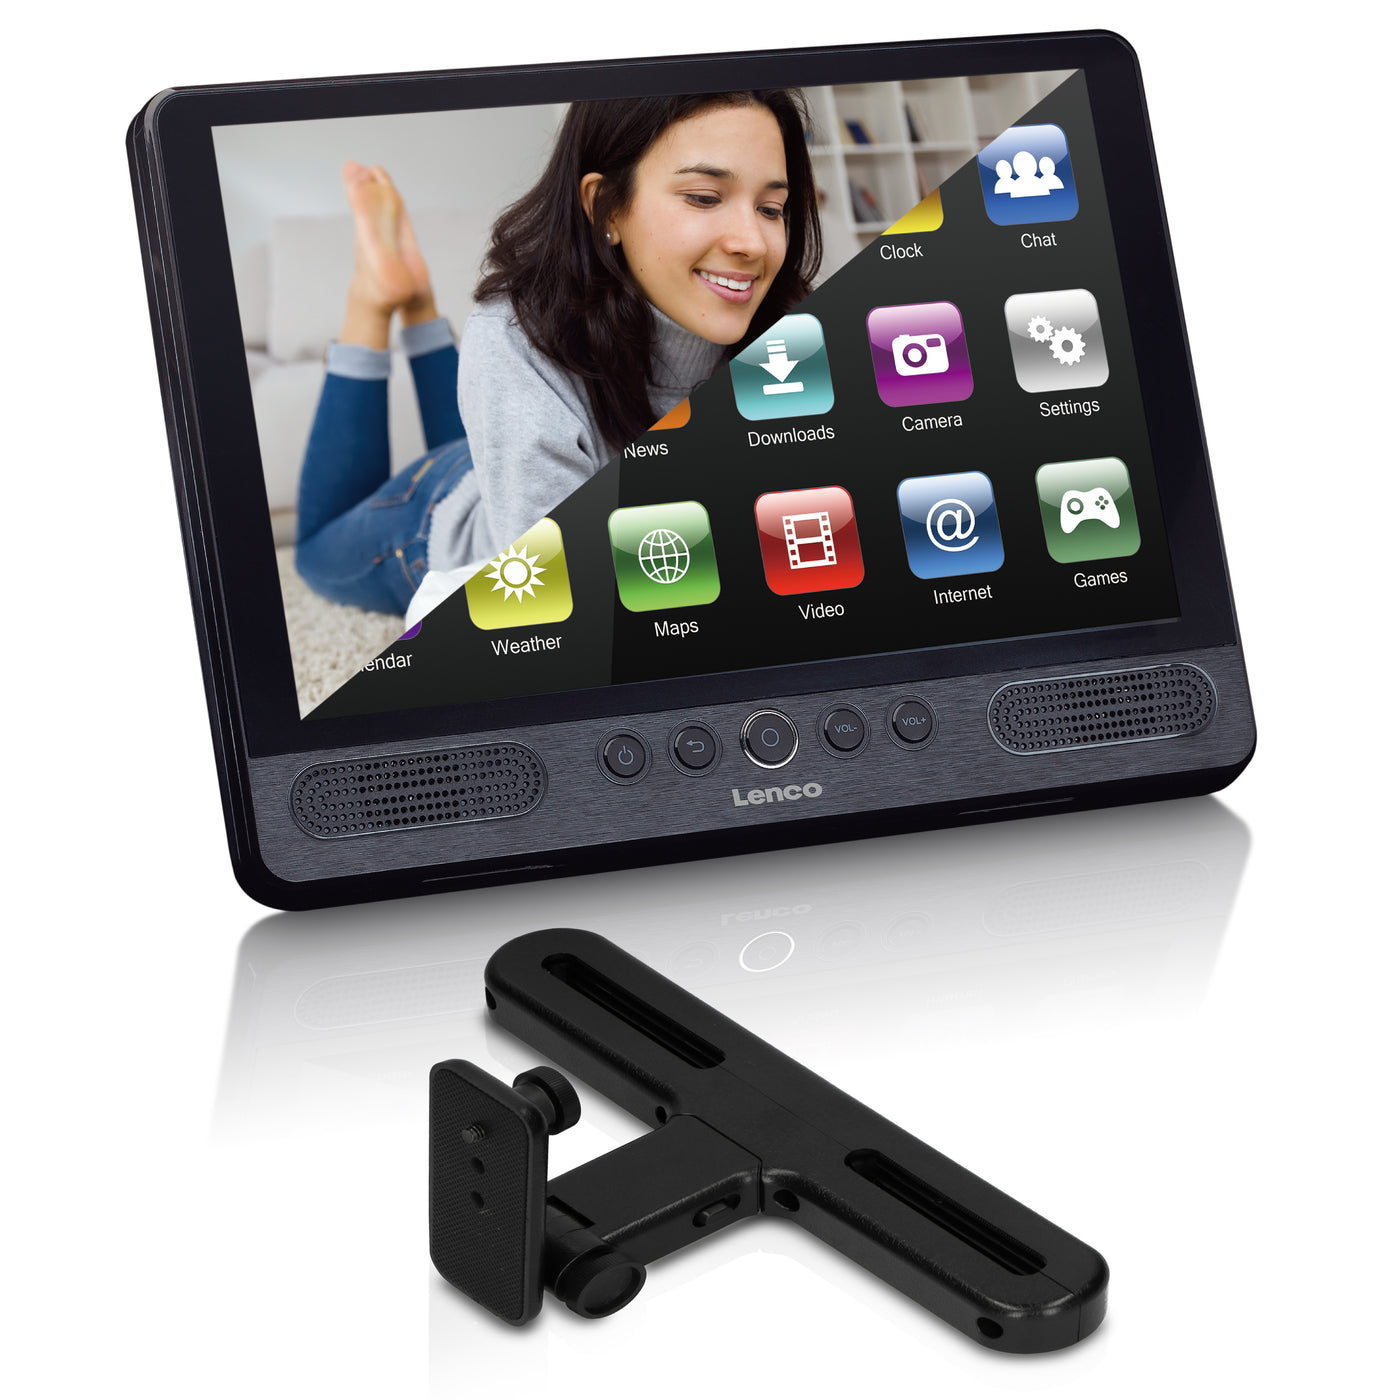 LENCO TDV1001BK - Tablet Android - – Lenco USB - player Portable - DVD -Catalog WIFI